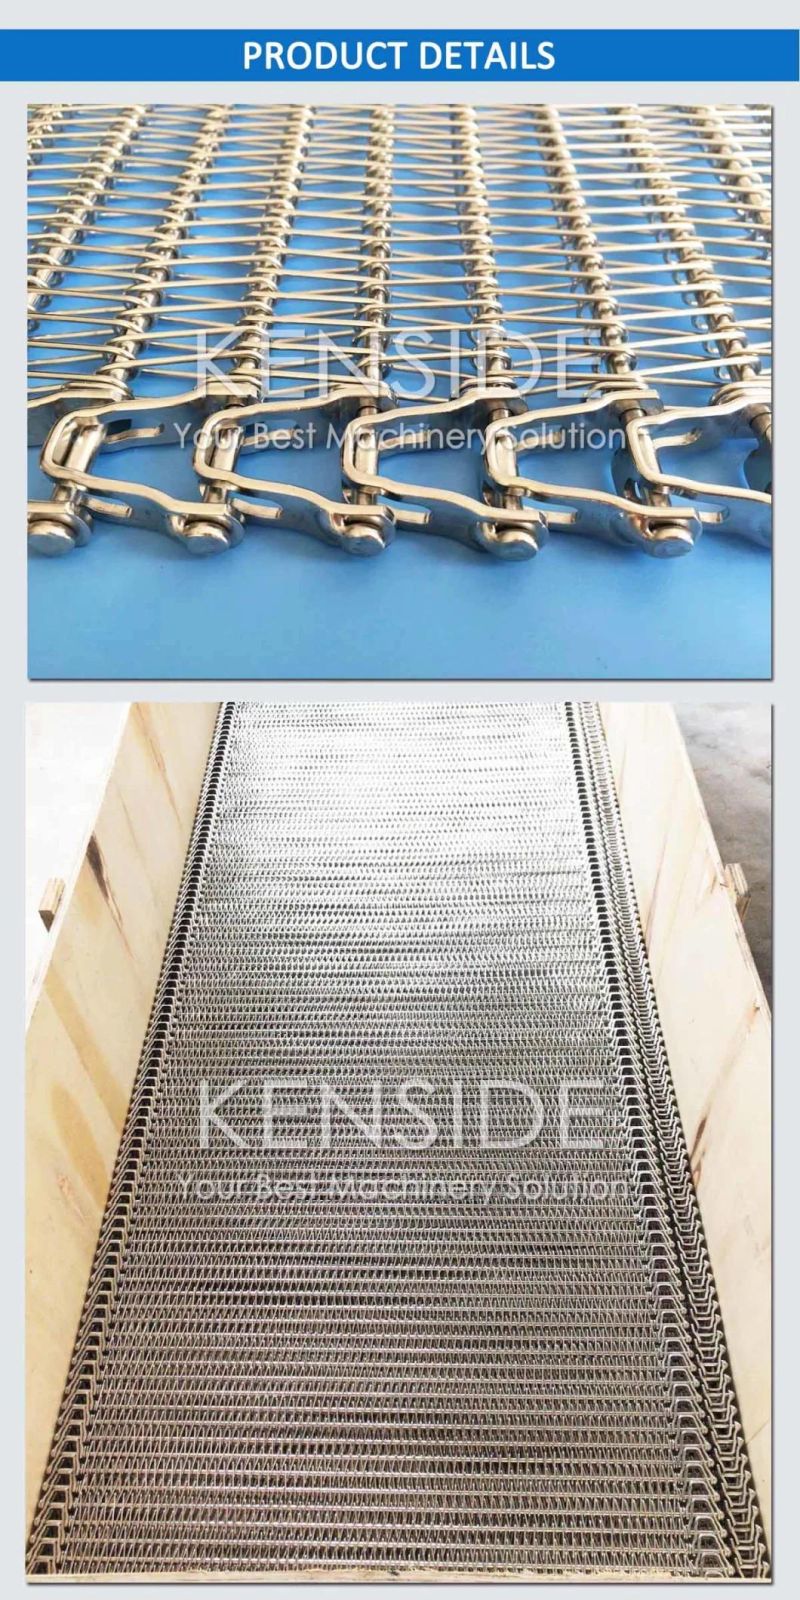 Stainless Steel Belting Spiral Conveyor Belts Reduced Radius Belts for Food Plant